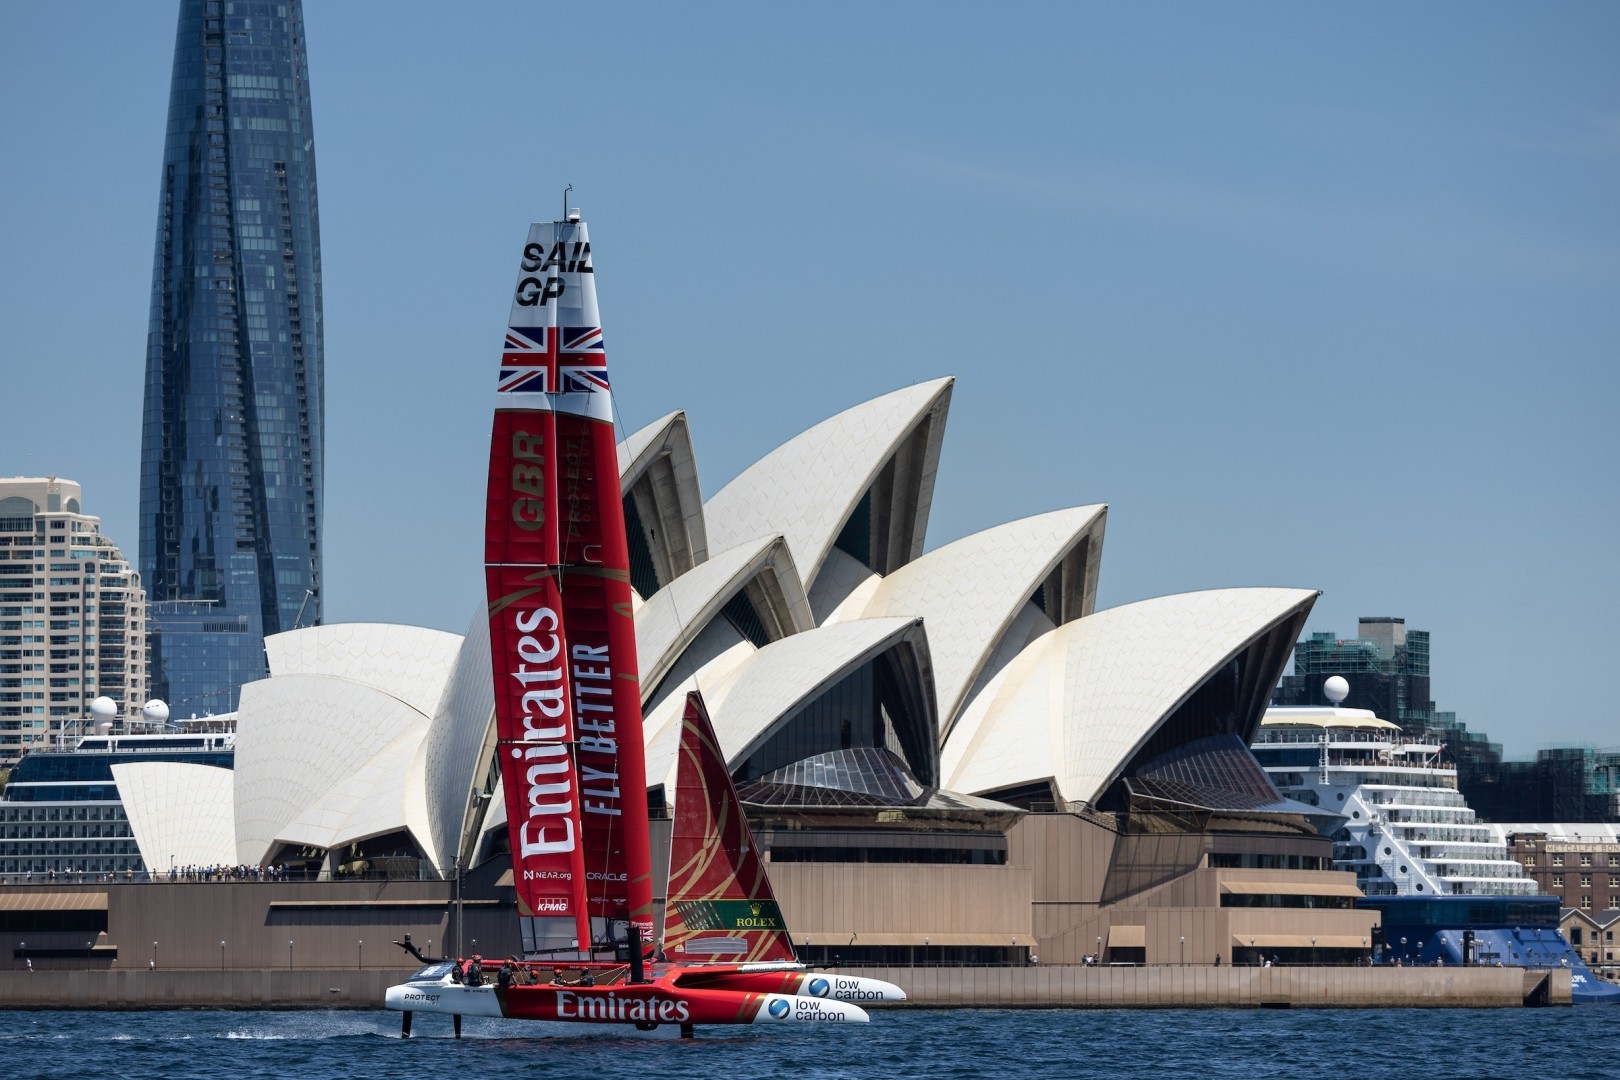 Great Britain SailGP Team and Emirates announce three-year partnership